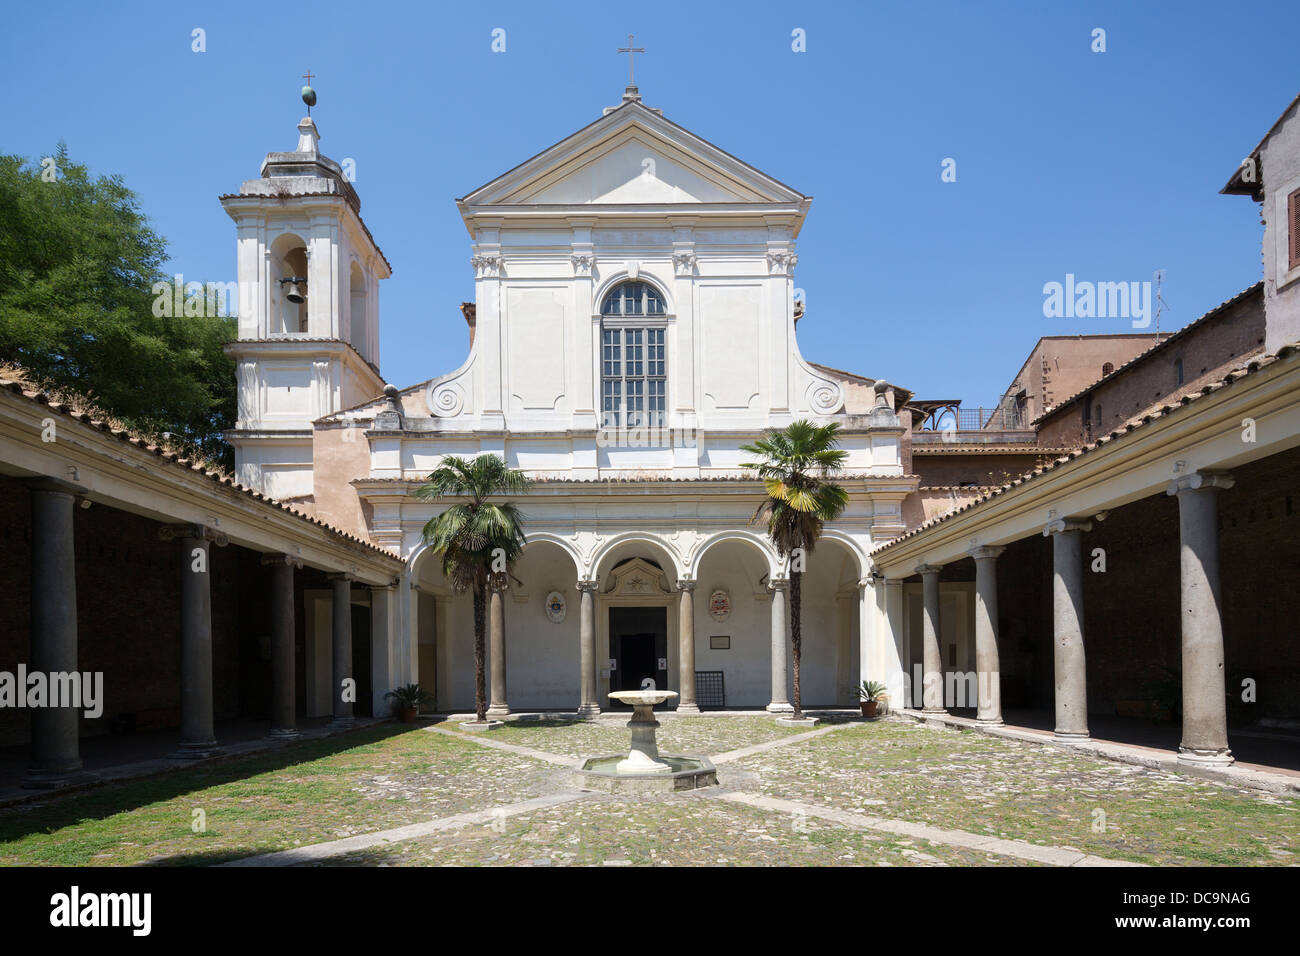 atrium and facade of Basilica of Saint Clement, Basilica di San Clemente al Laterano, Rome, Italy Stock Photo